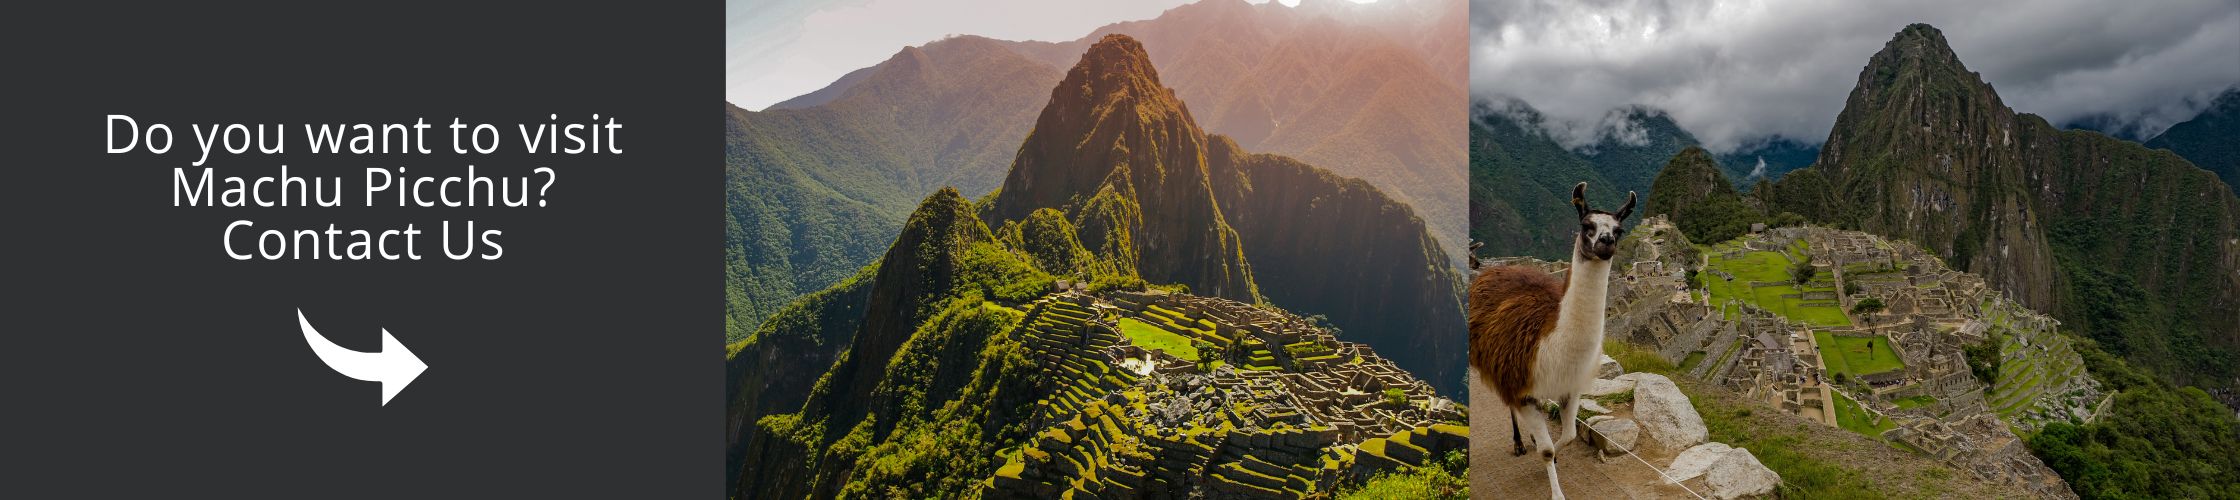 Visit Machu Picchu with us